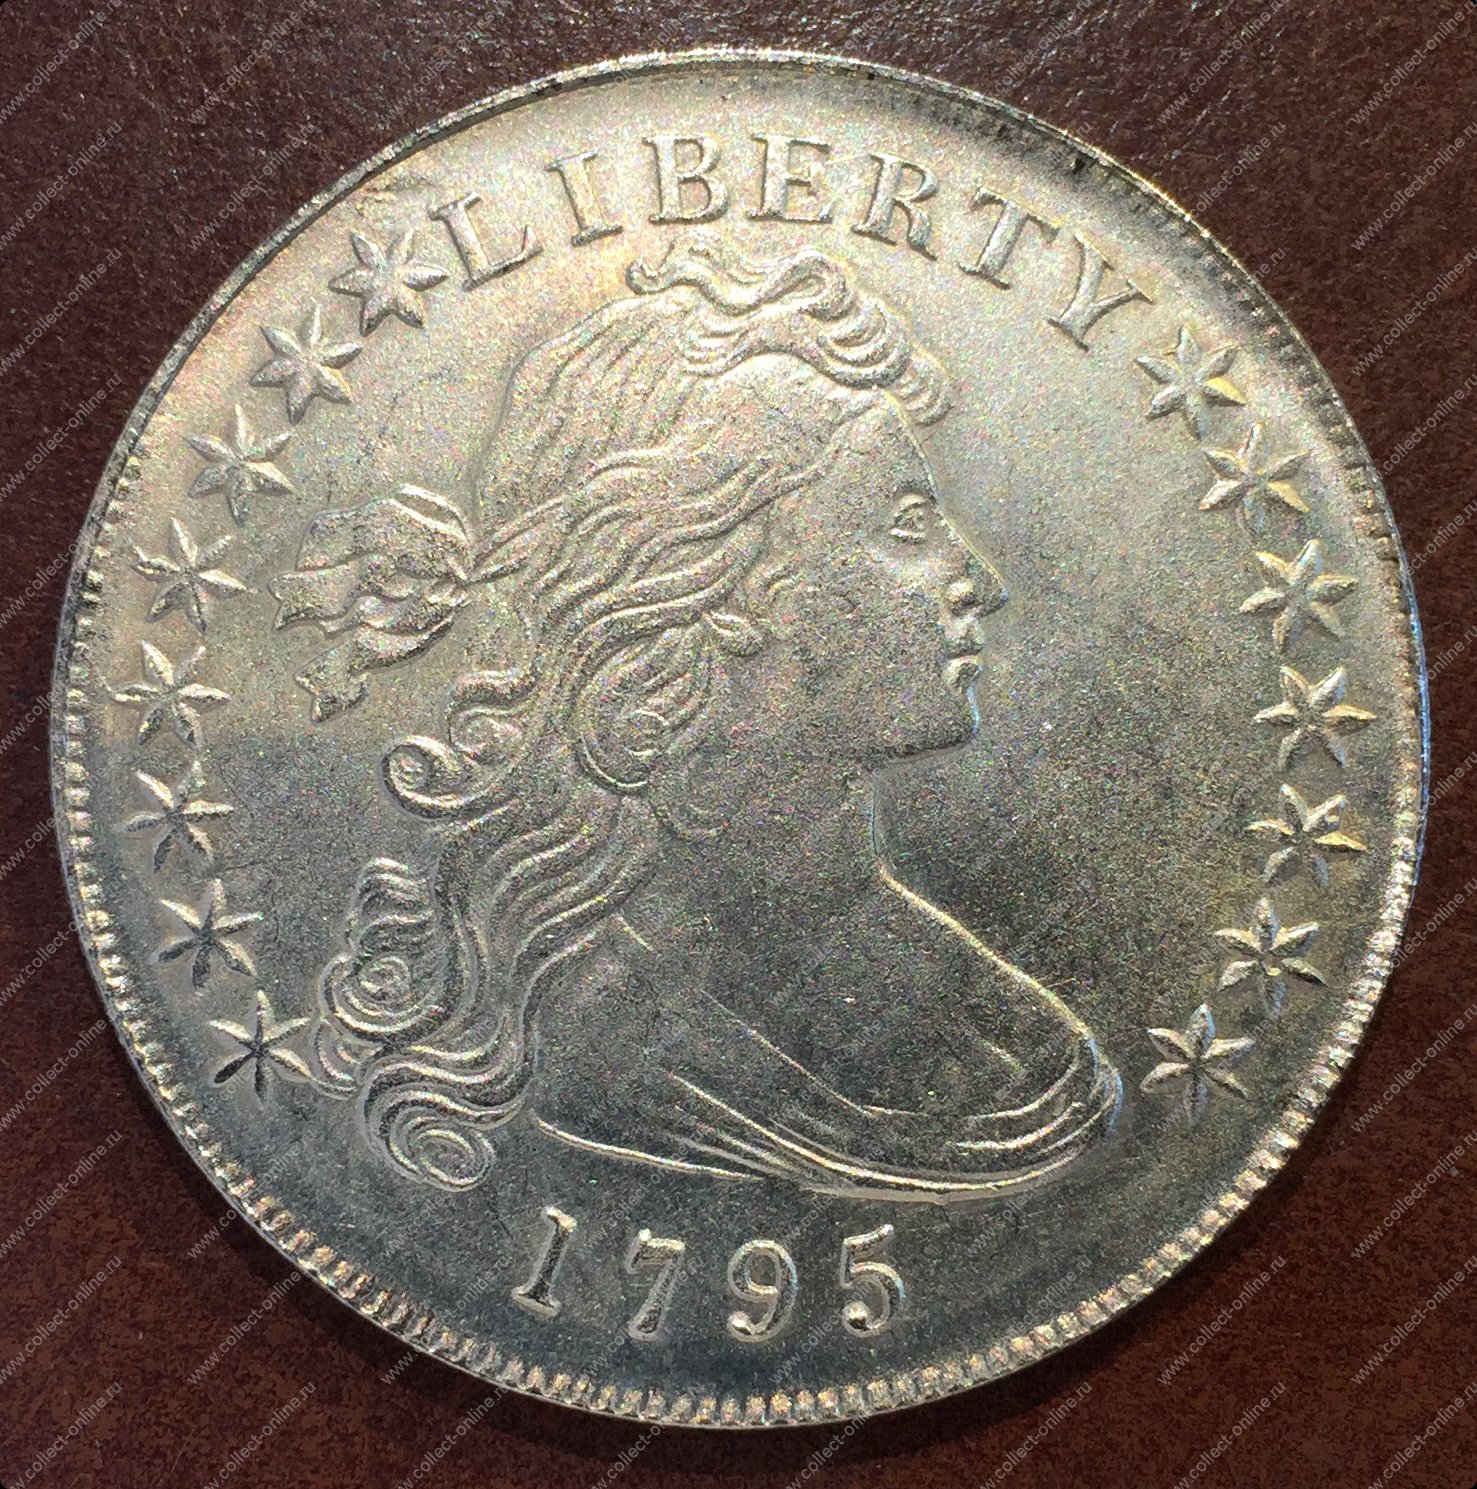 3 18 долларов. Монета 1795 Америка. Доллар 18 века. Золотая монета США 1795.